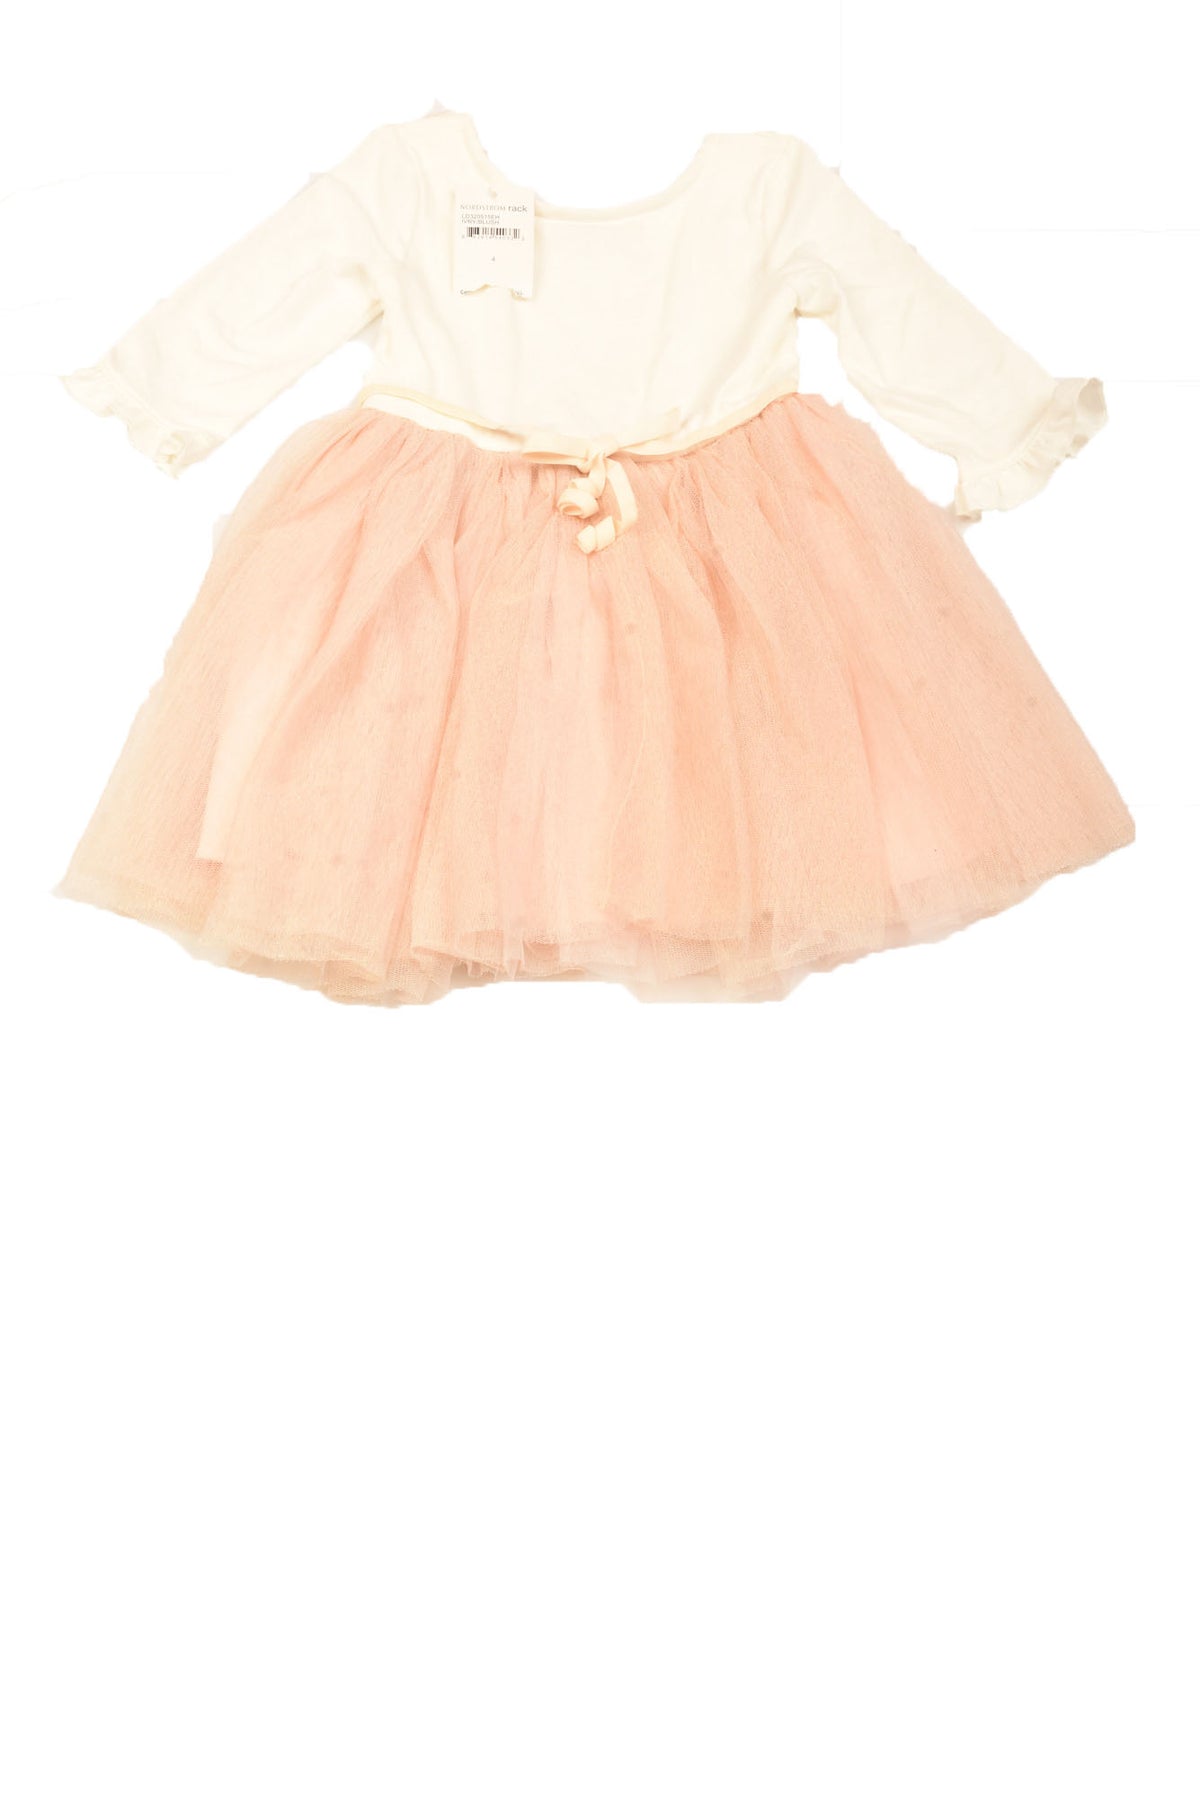 Zunie Size 4 Toddler Dress